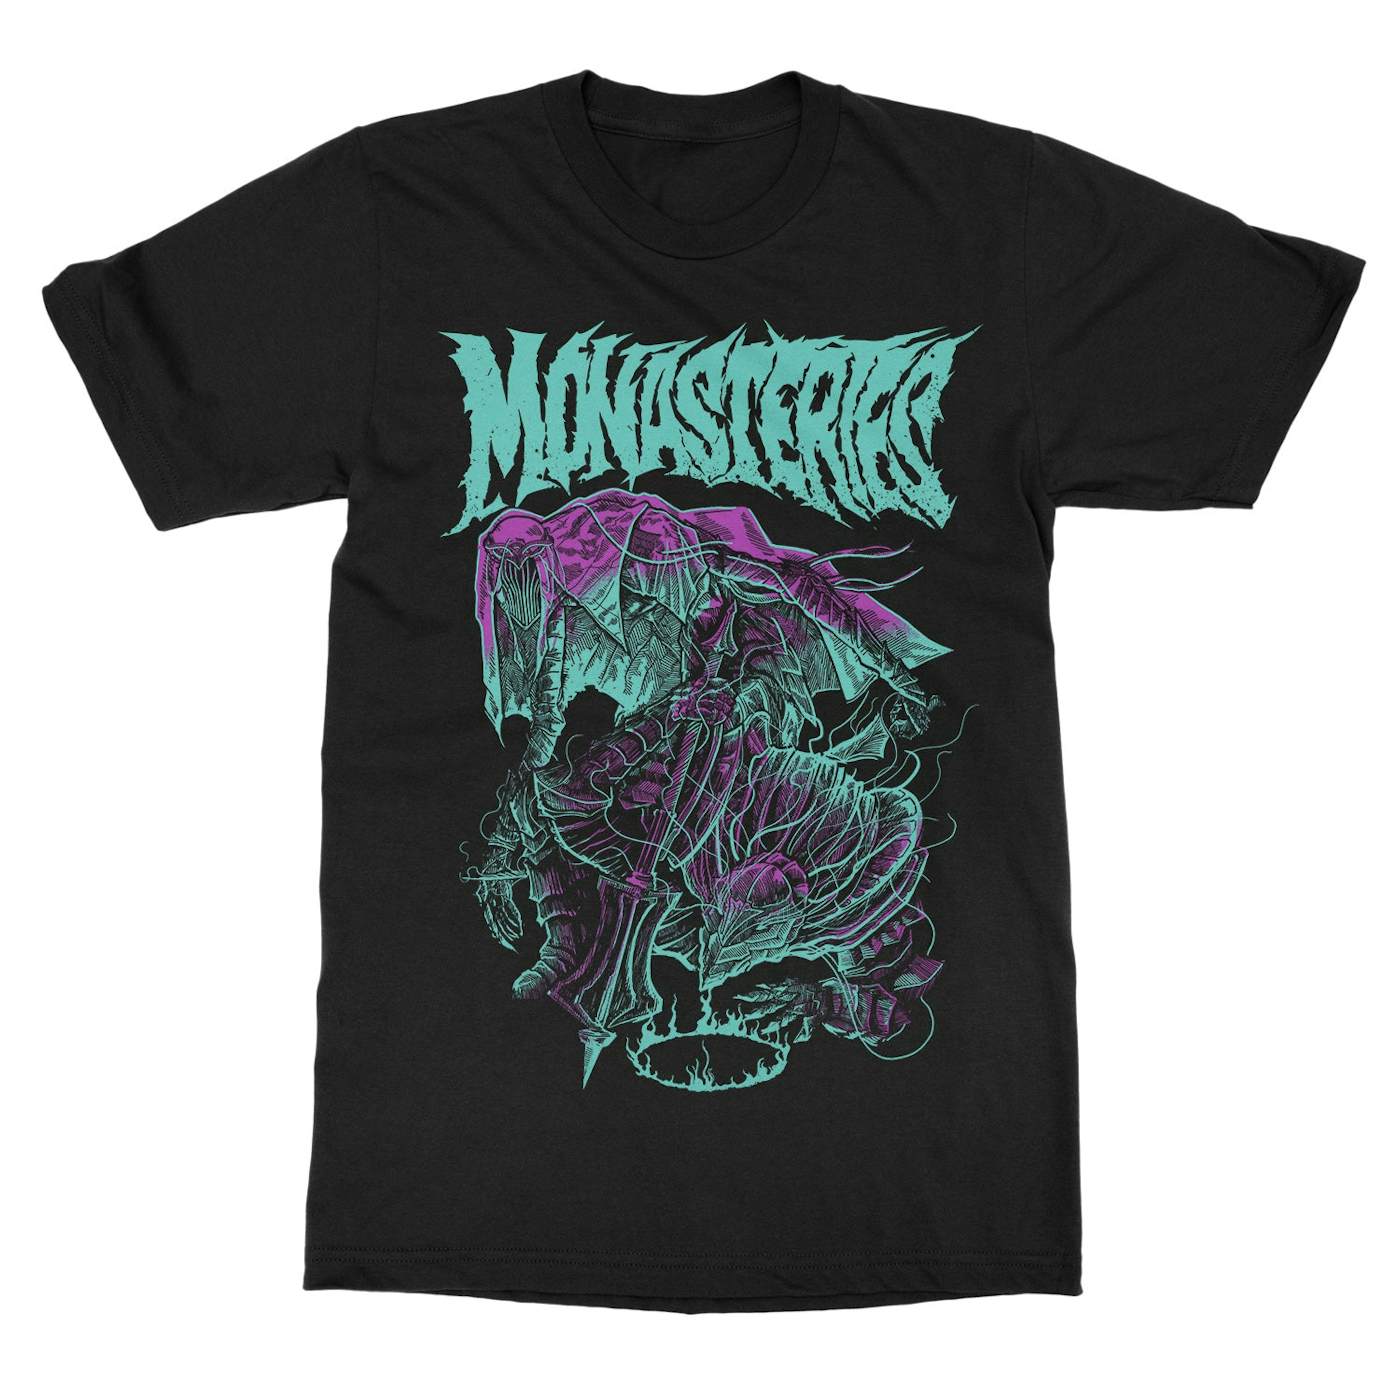 Monasteries "Dark Souls RIP" T-Shirt